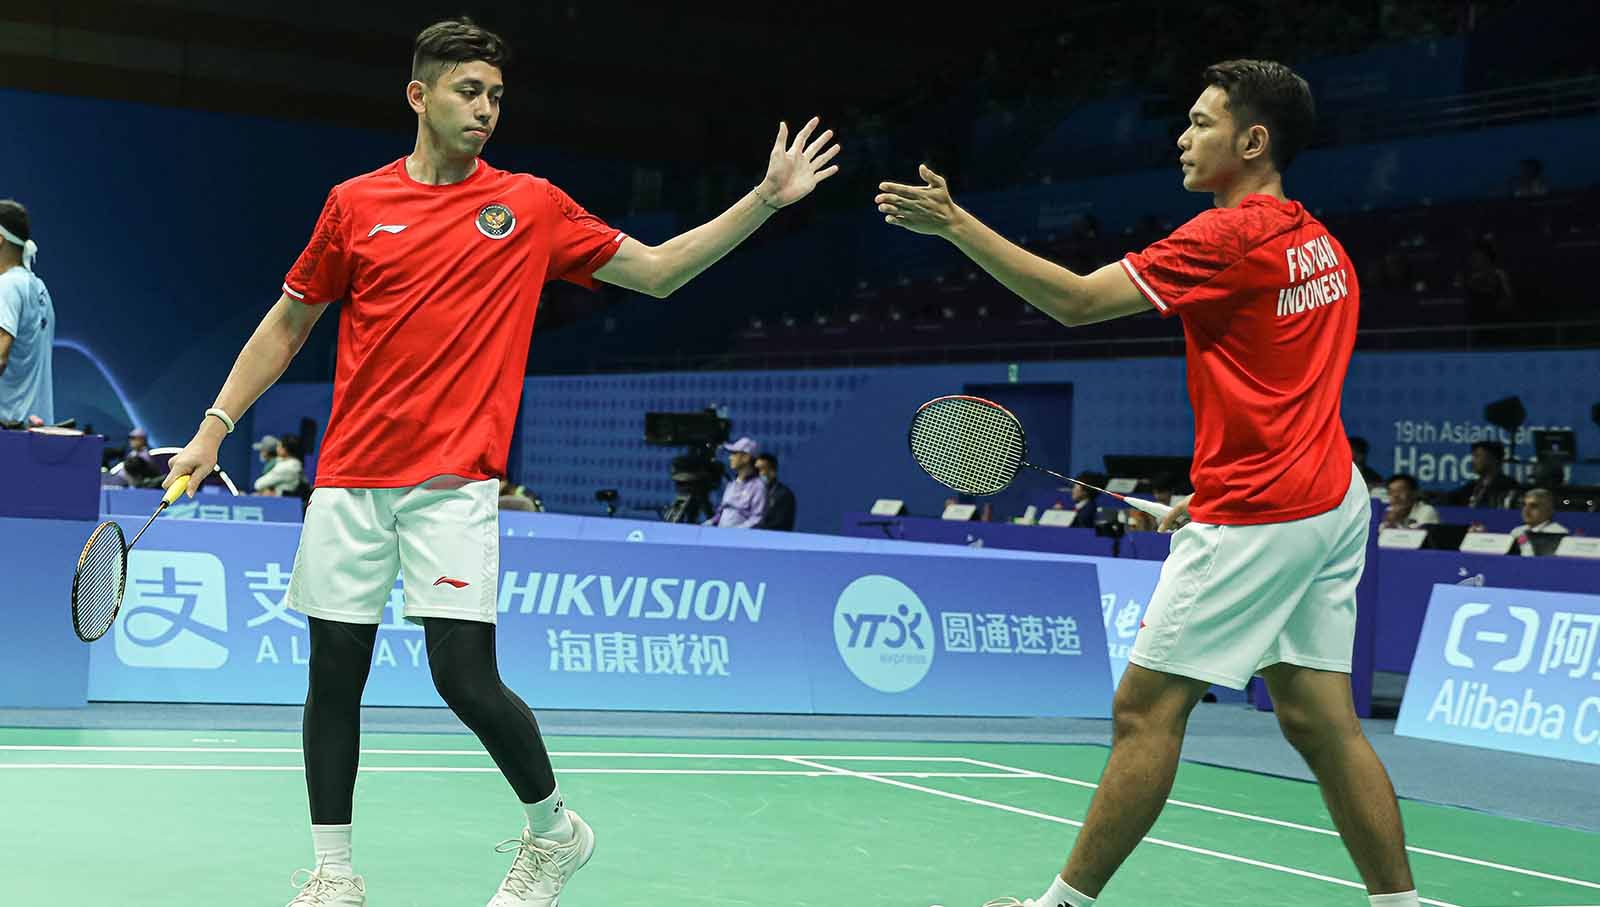 Pasangan ganda putra Indonesia, Fajar Alfian/Muhammad Rian Ardianto akan berjuang mempertahankan gelar juara Denmark Open. (Foto: PBSI) Copyright: © PBSI